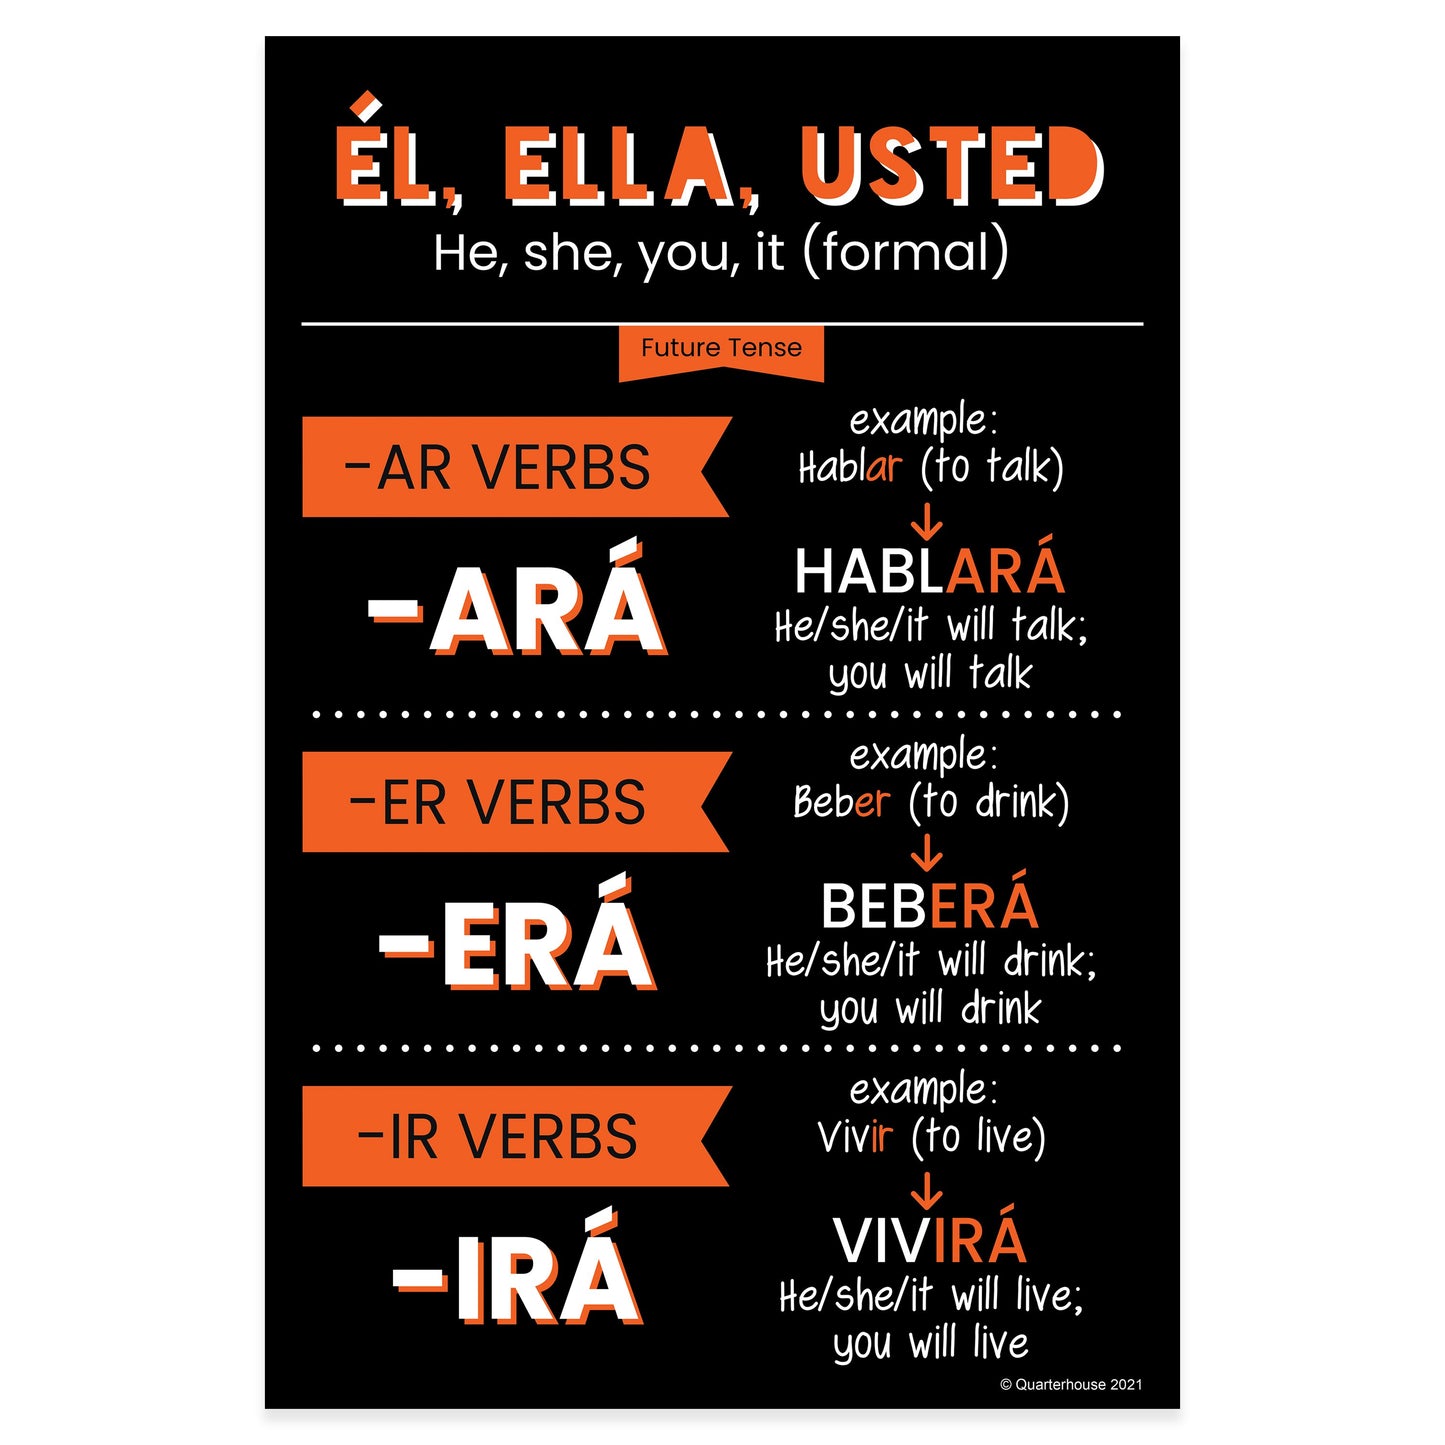 Quarterhouse Él, Ella, Usted - Future Tense Spanish Verb Conjugation (Dark-Themed) Poster, Spanish and ESL Classroom Materials for Teachers